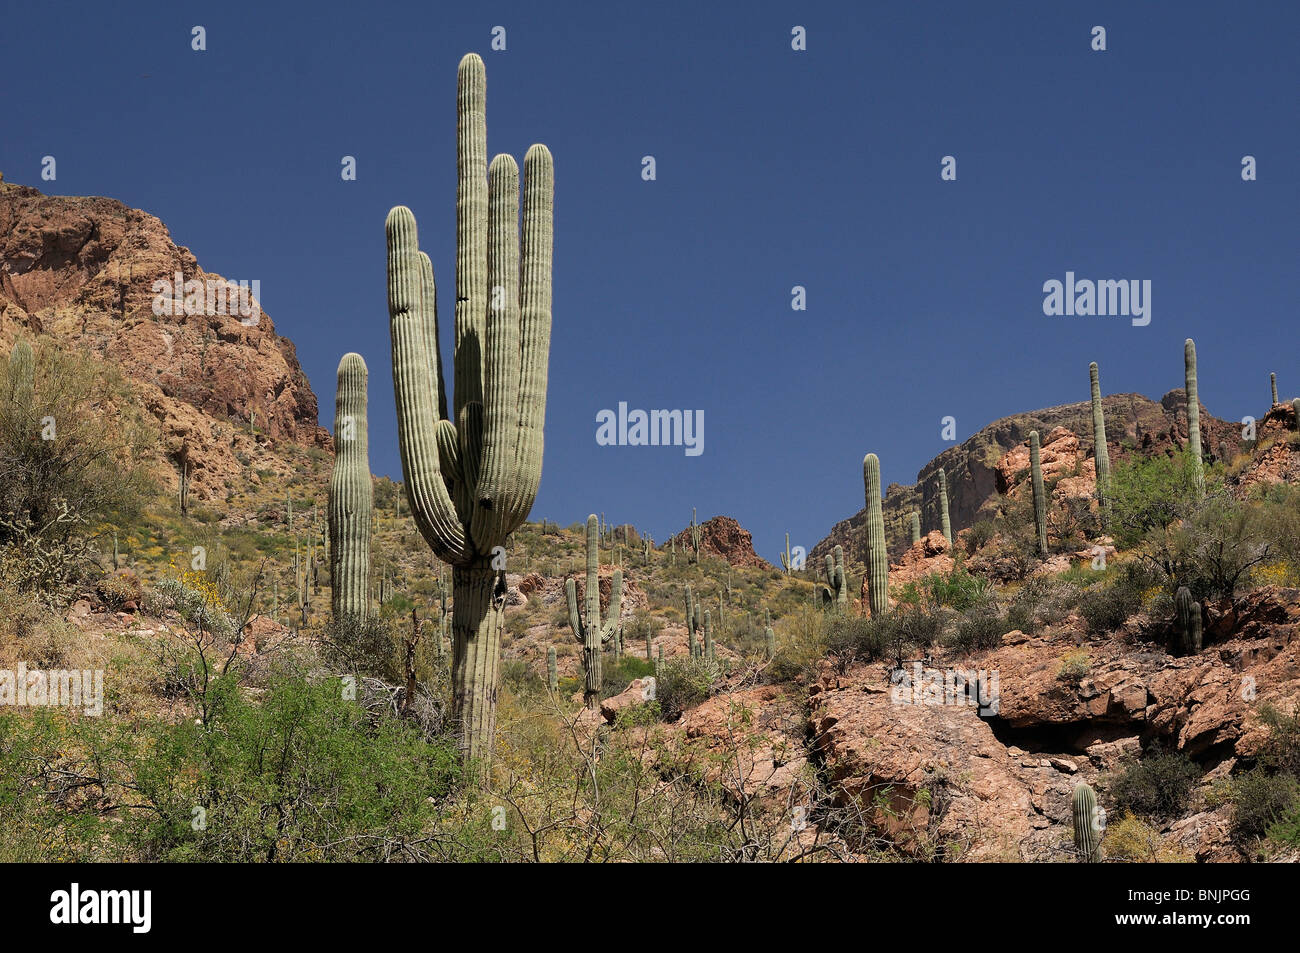 Saguaros cactus cacti along Apache Trail near Tortilla Flats Arizona USA America North America travel landscape nature blue sky Stock Photo